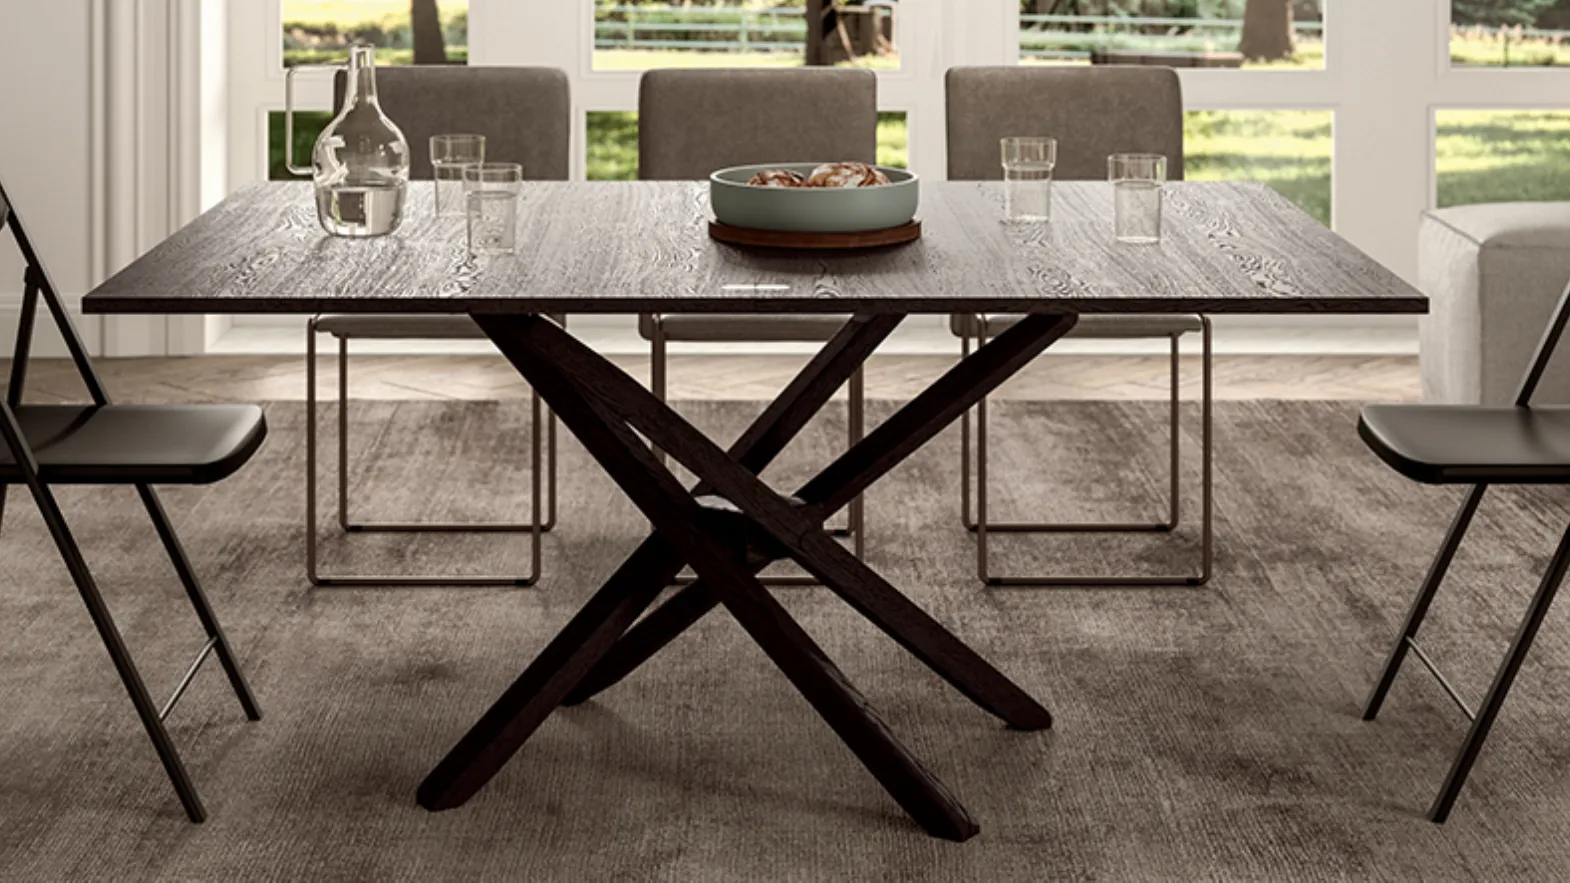 Su&Gi Ozzio transformable coffee table